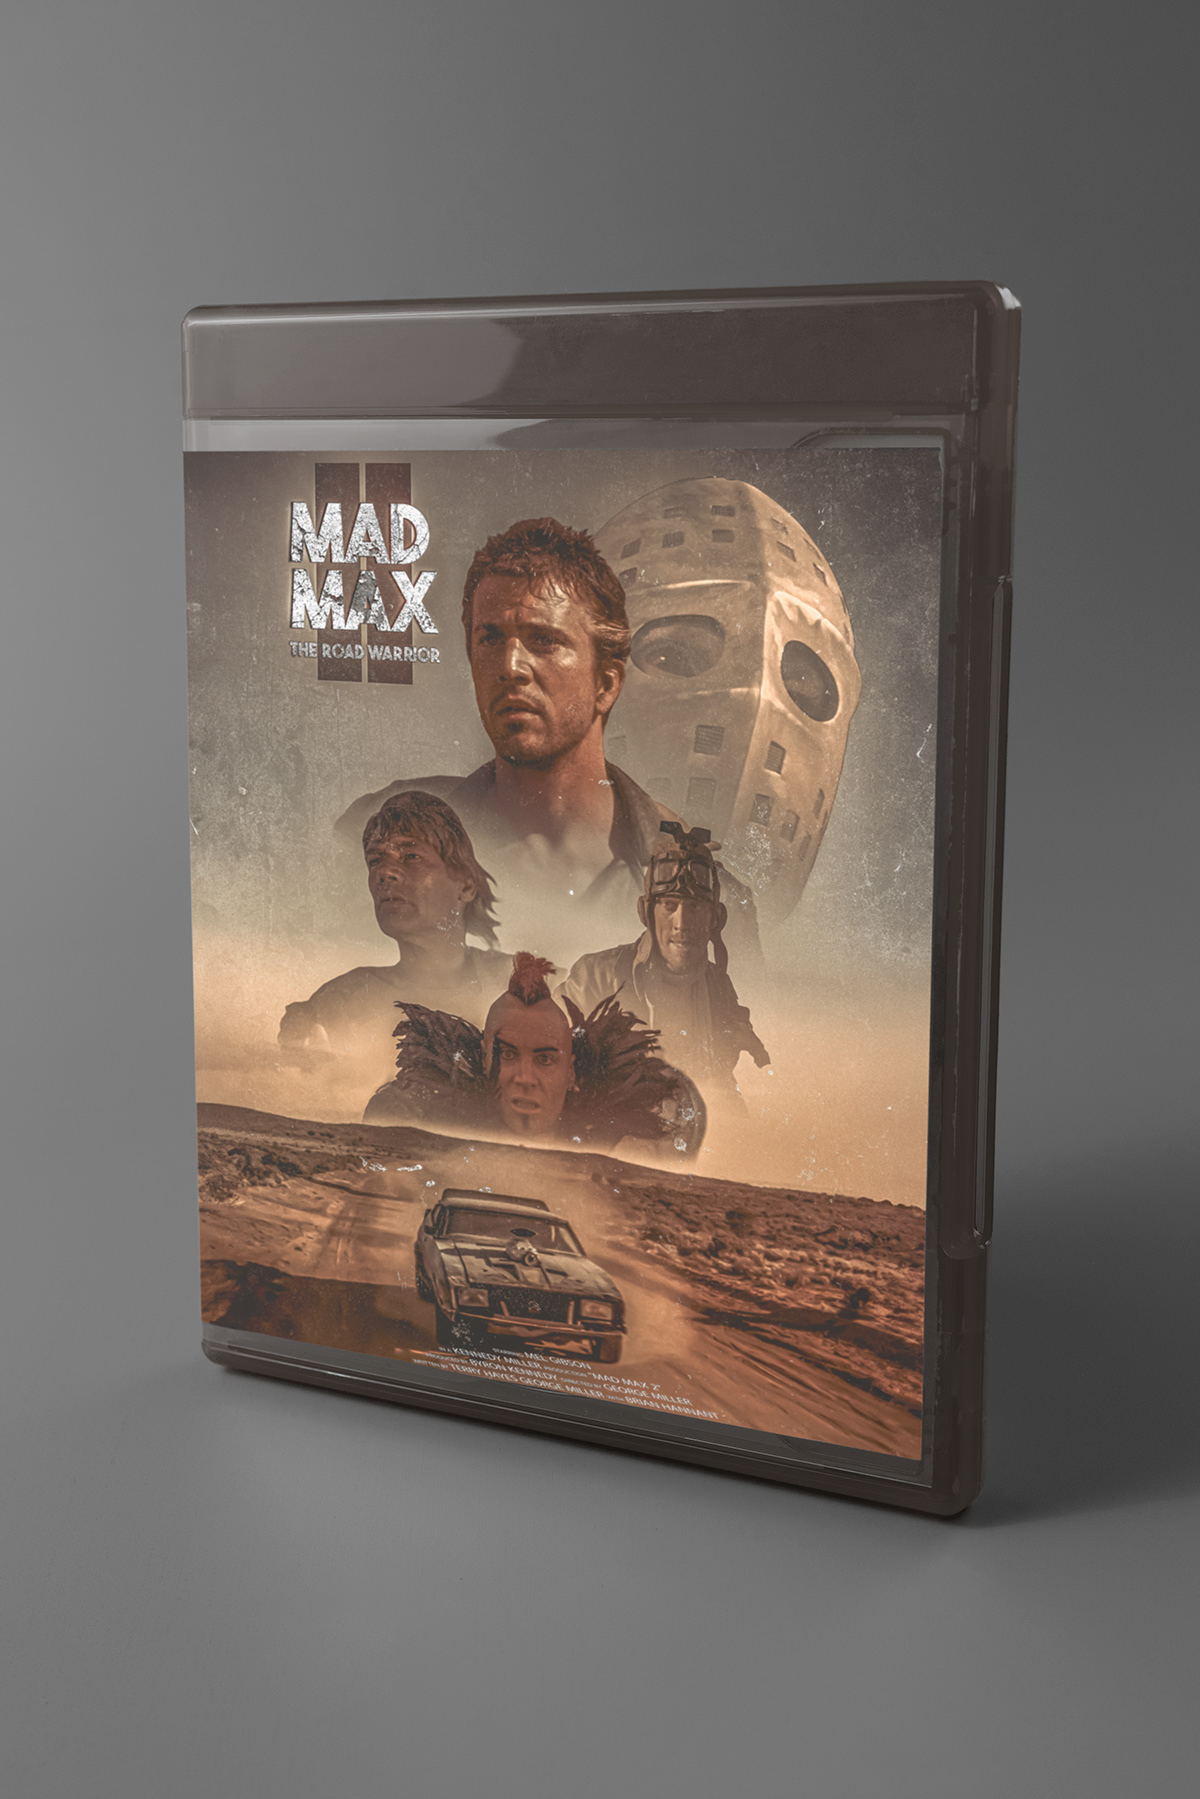 Mel Gibson George Miller Poster Design alternative movie poster Fan Art artwork Mad Max 2 the road warrior